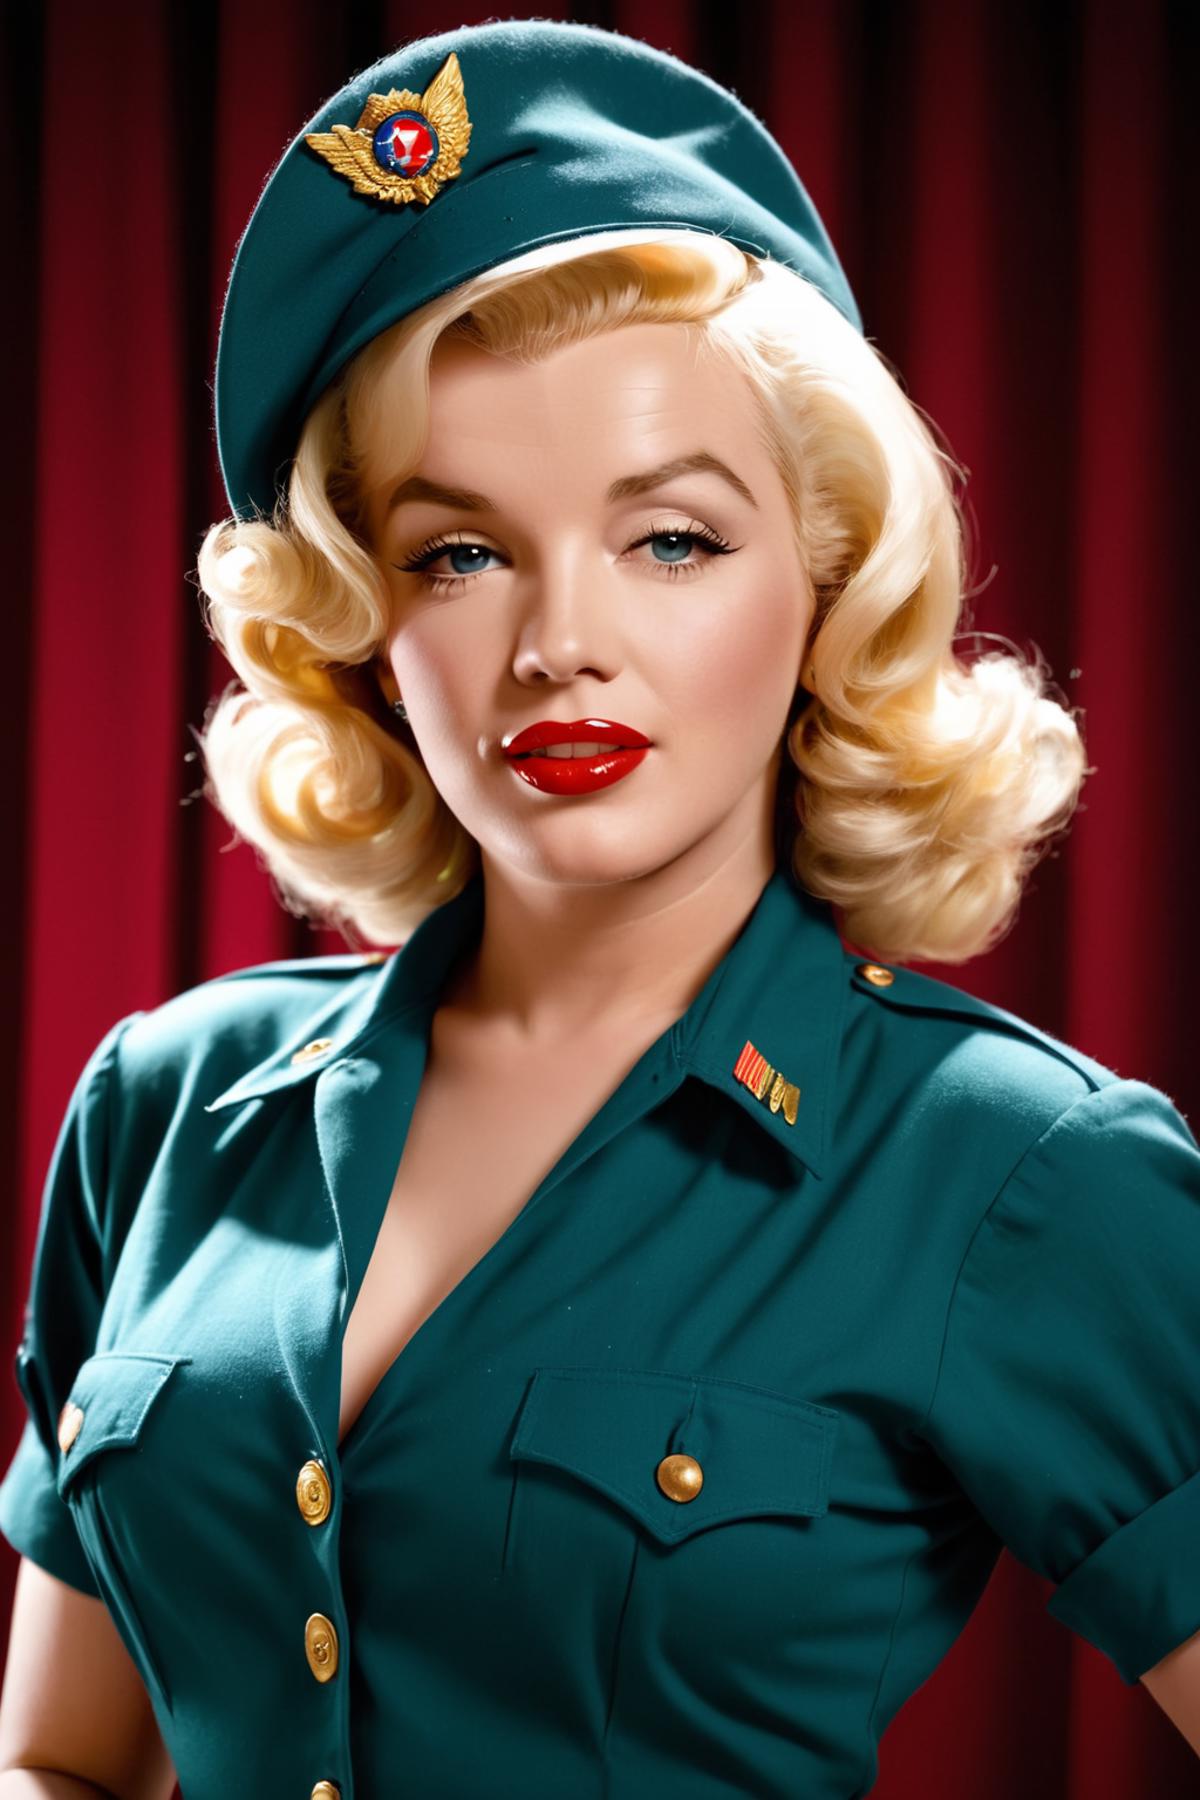 A blonde Marilyn Monroe lookalike in a green military uniform.